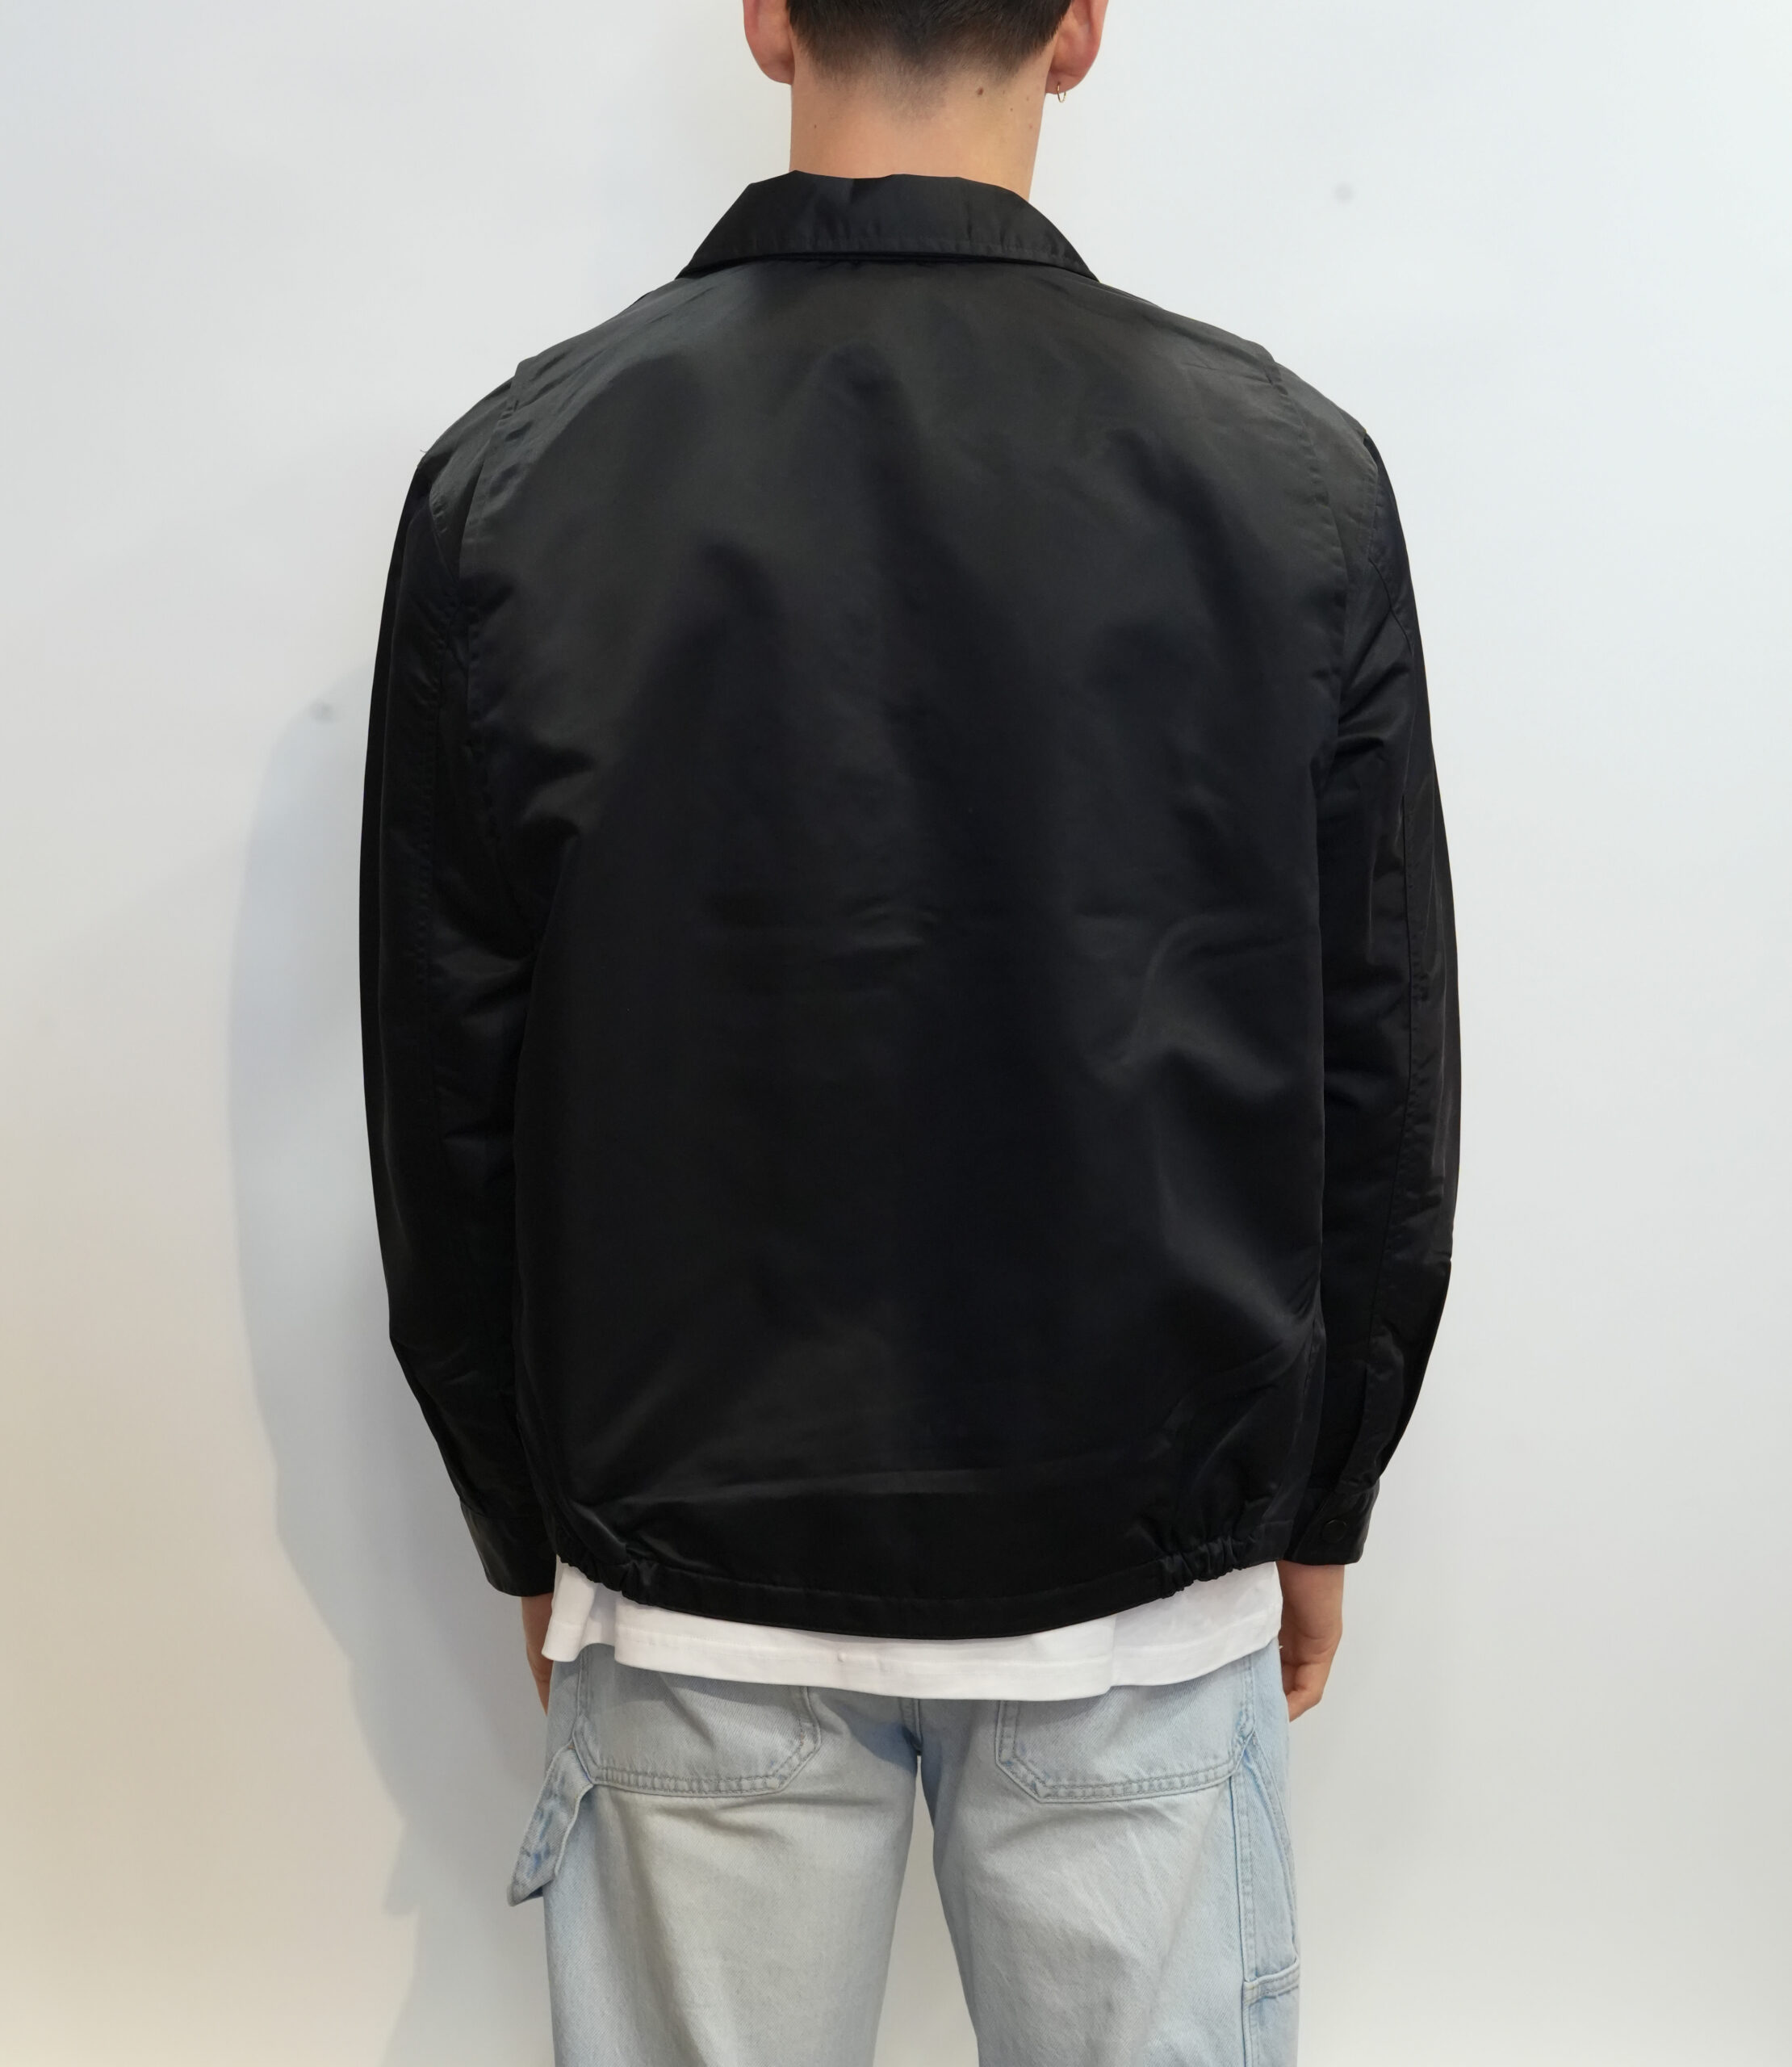 Carhartt WIP jacket Manu Jacket men's black color